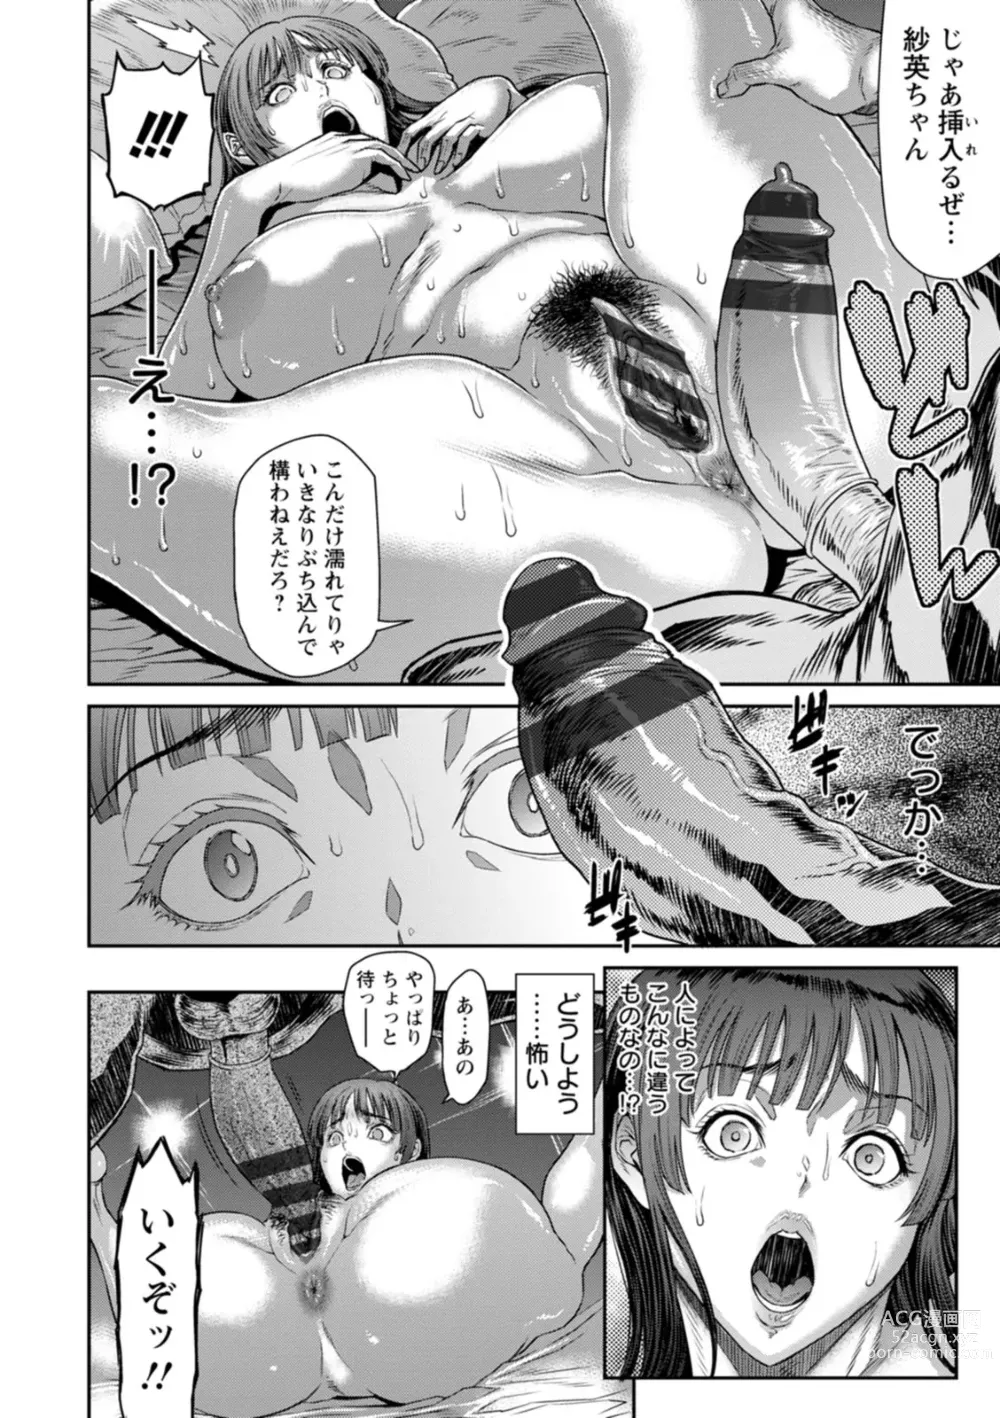 Page 170 of manga Obscene Box